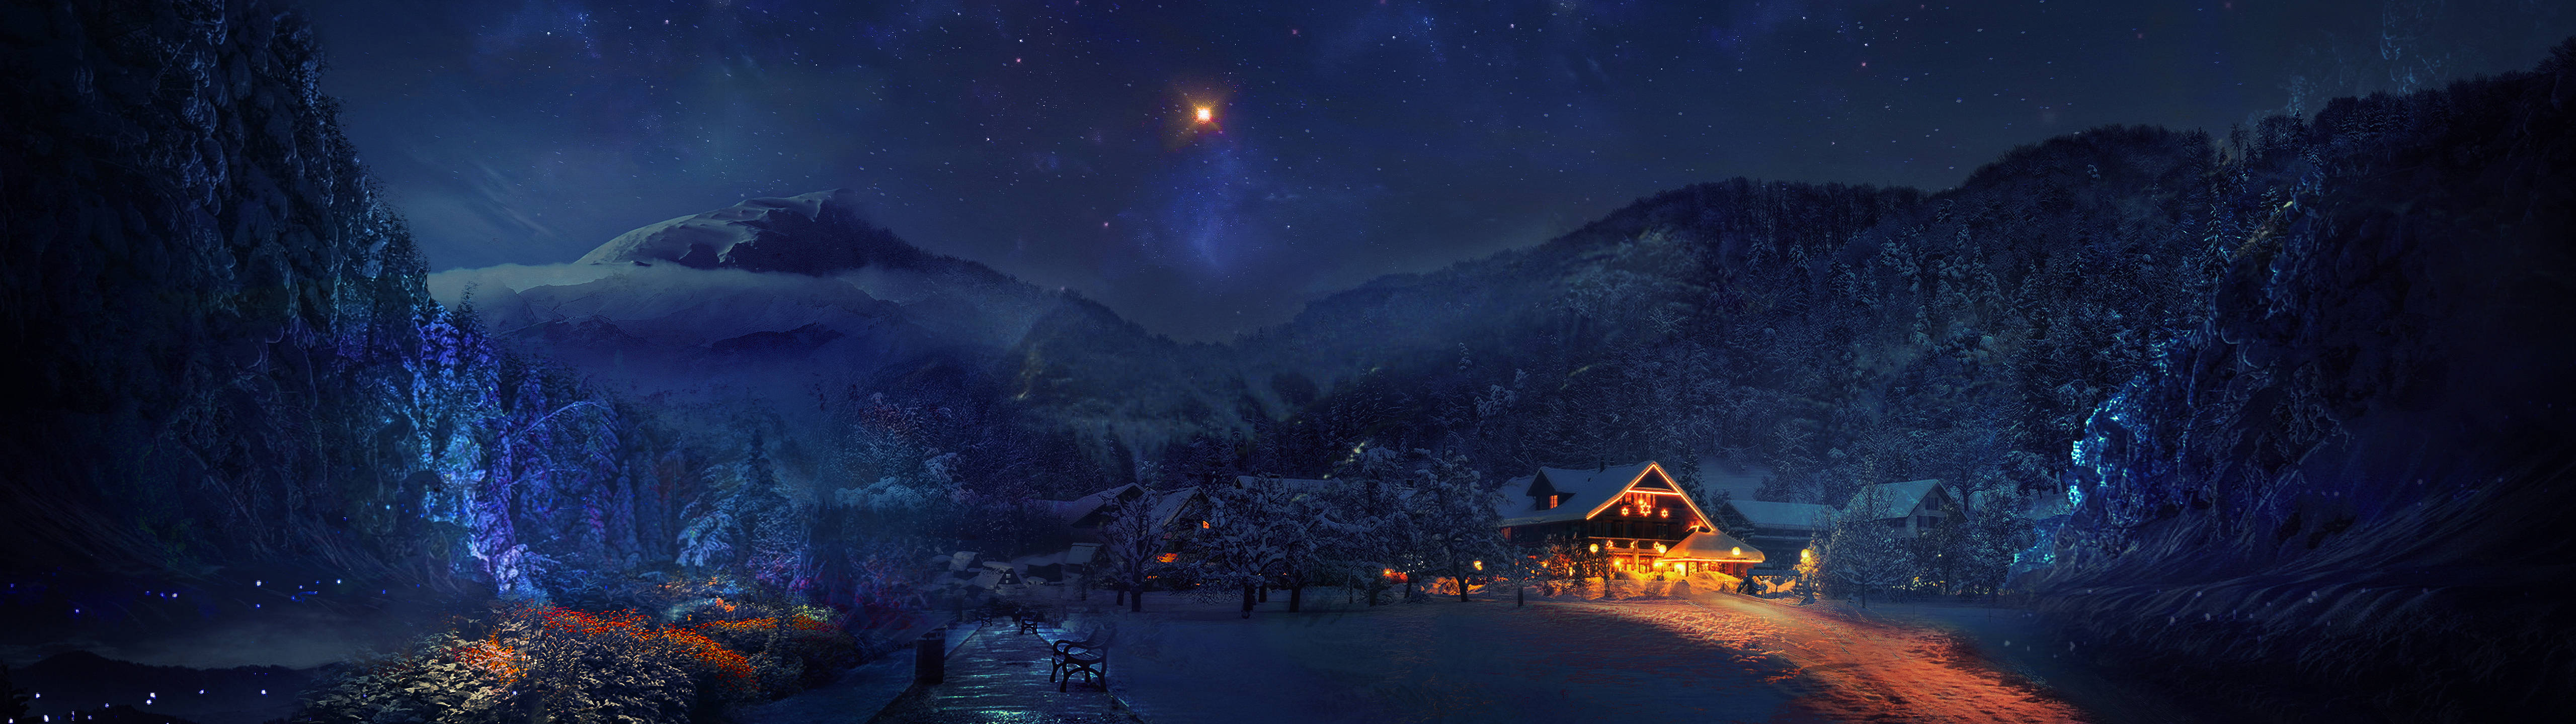 Ultra-wide Fantasy Art Winter Night